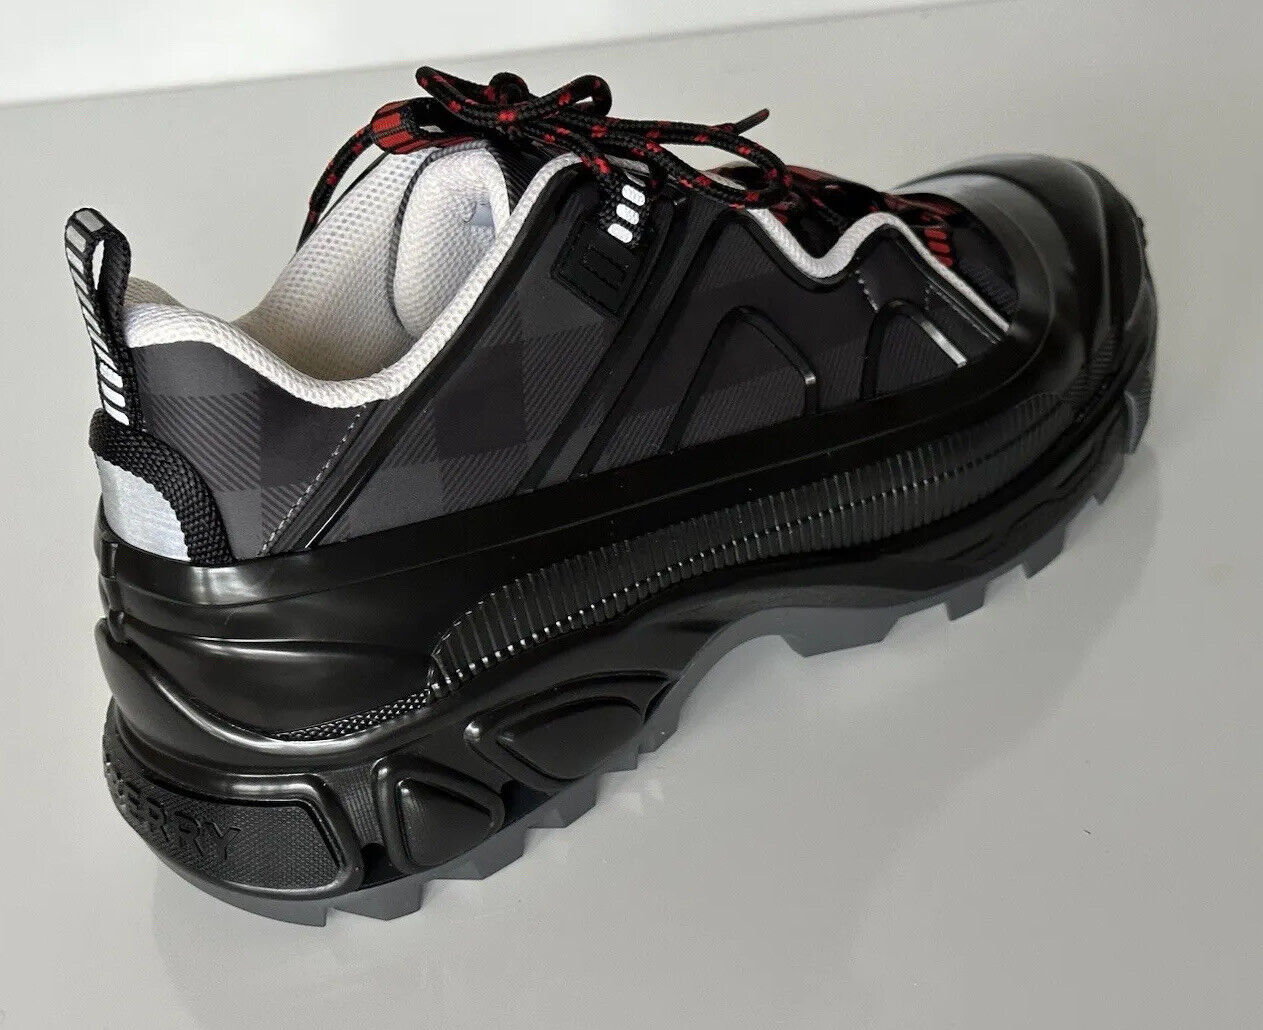 NIB $890 Burberry Arthur Men's Dark Grey IP Check Sneakers 10 US (43) 8055576 IT